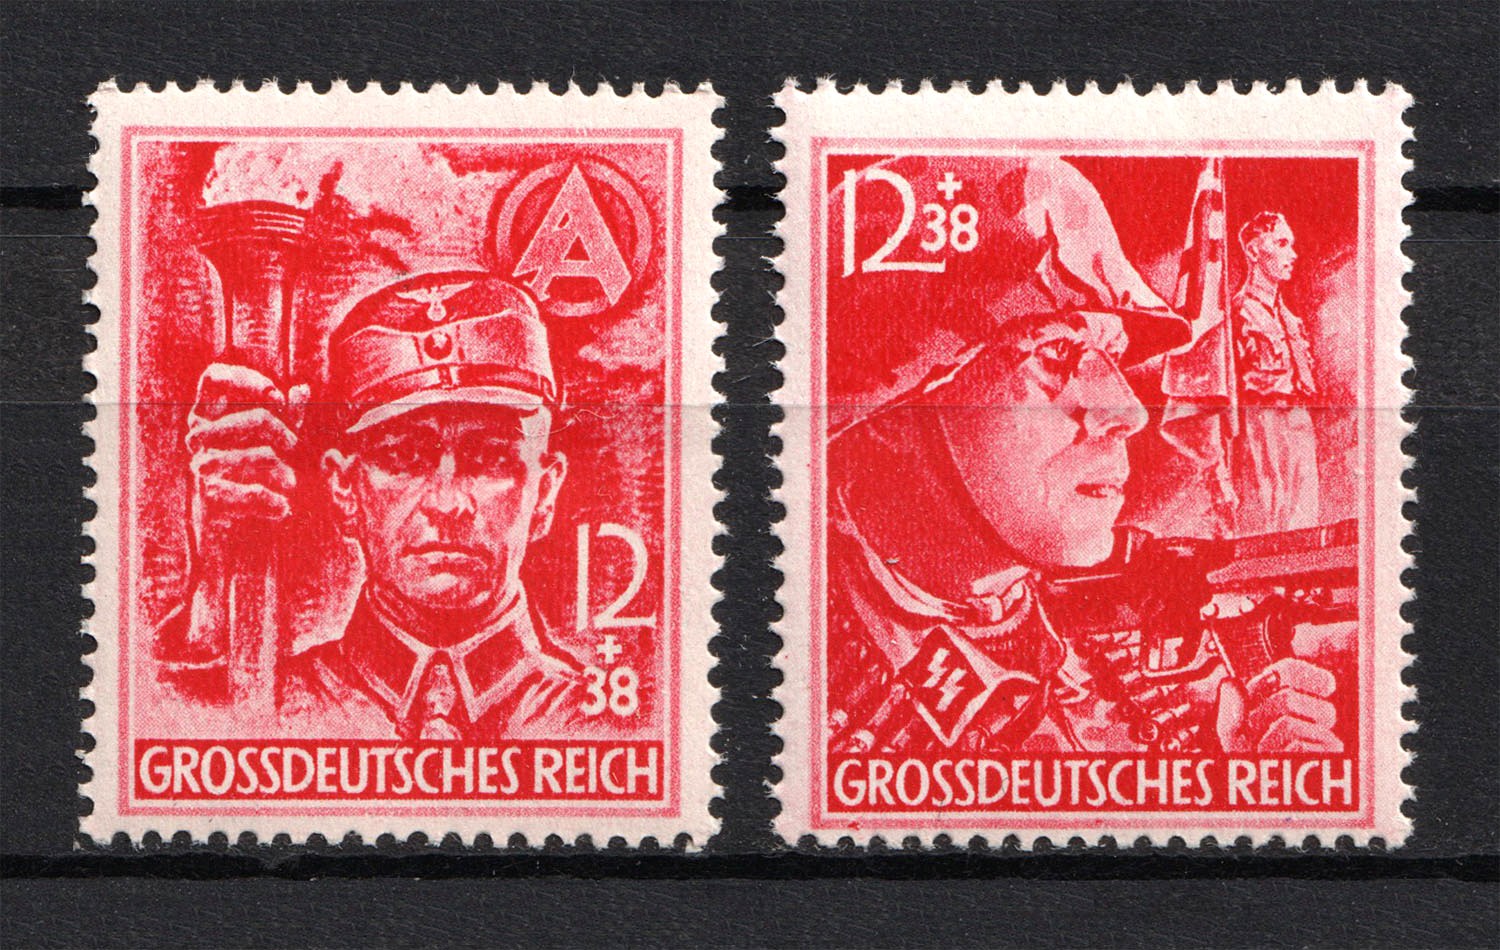 Фашистские марки. Почтовые марки третьего рейха Grossdeutsches Reich. Монеты 1945 Рейх. Марки 3 рейха 1945.